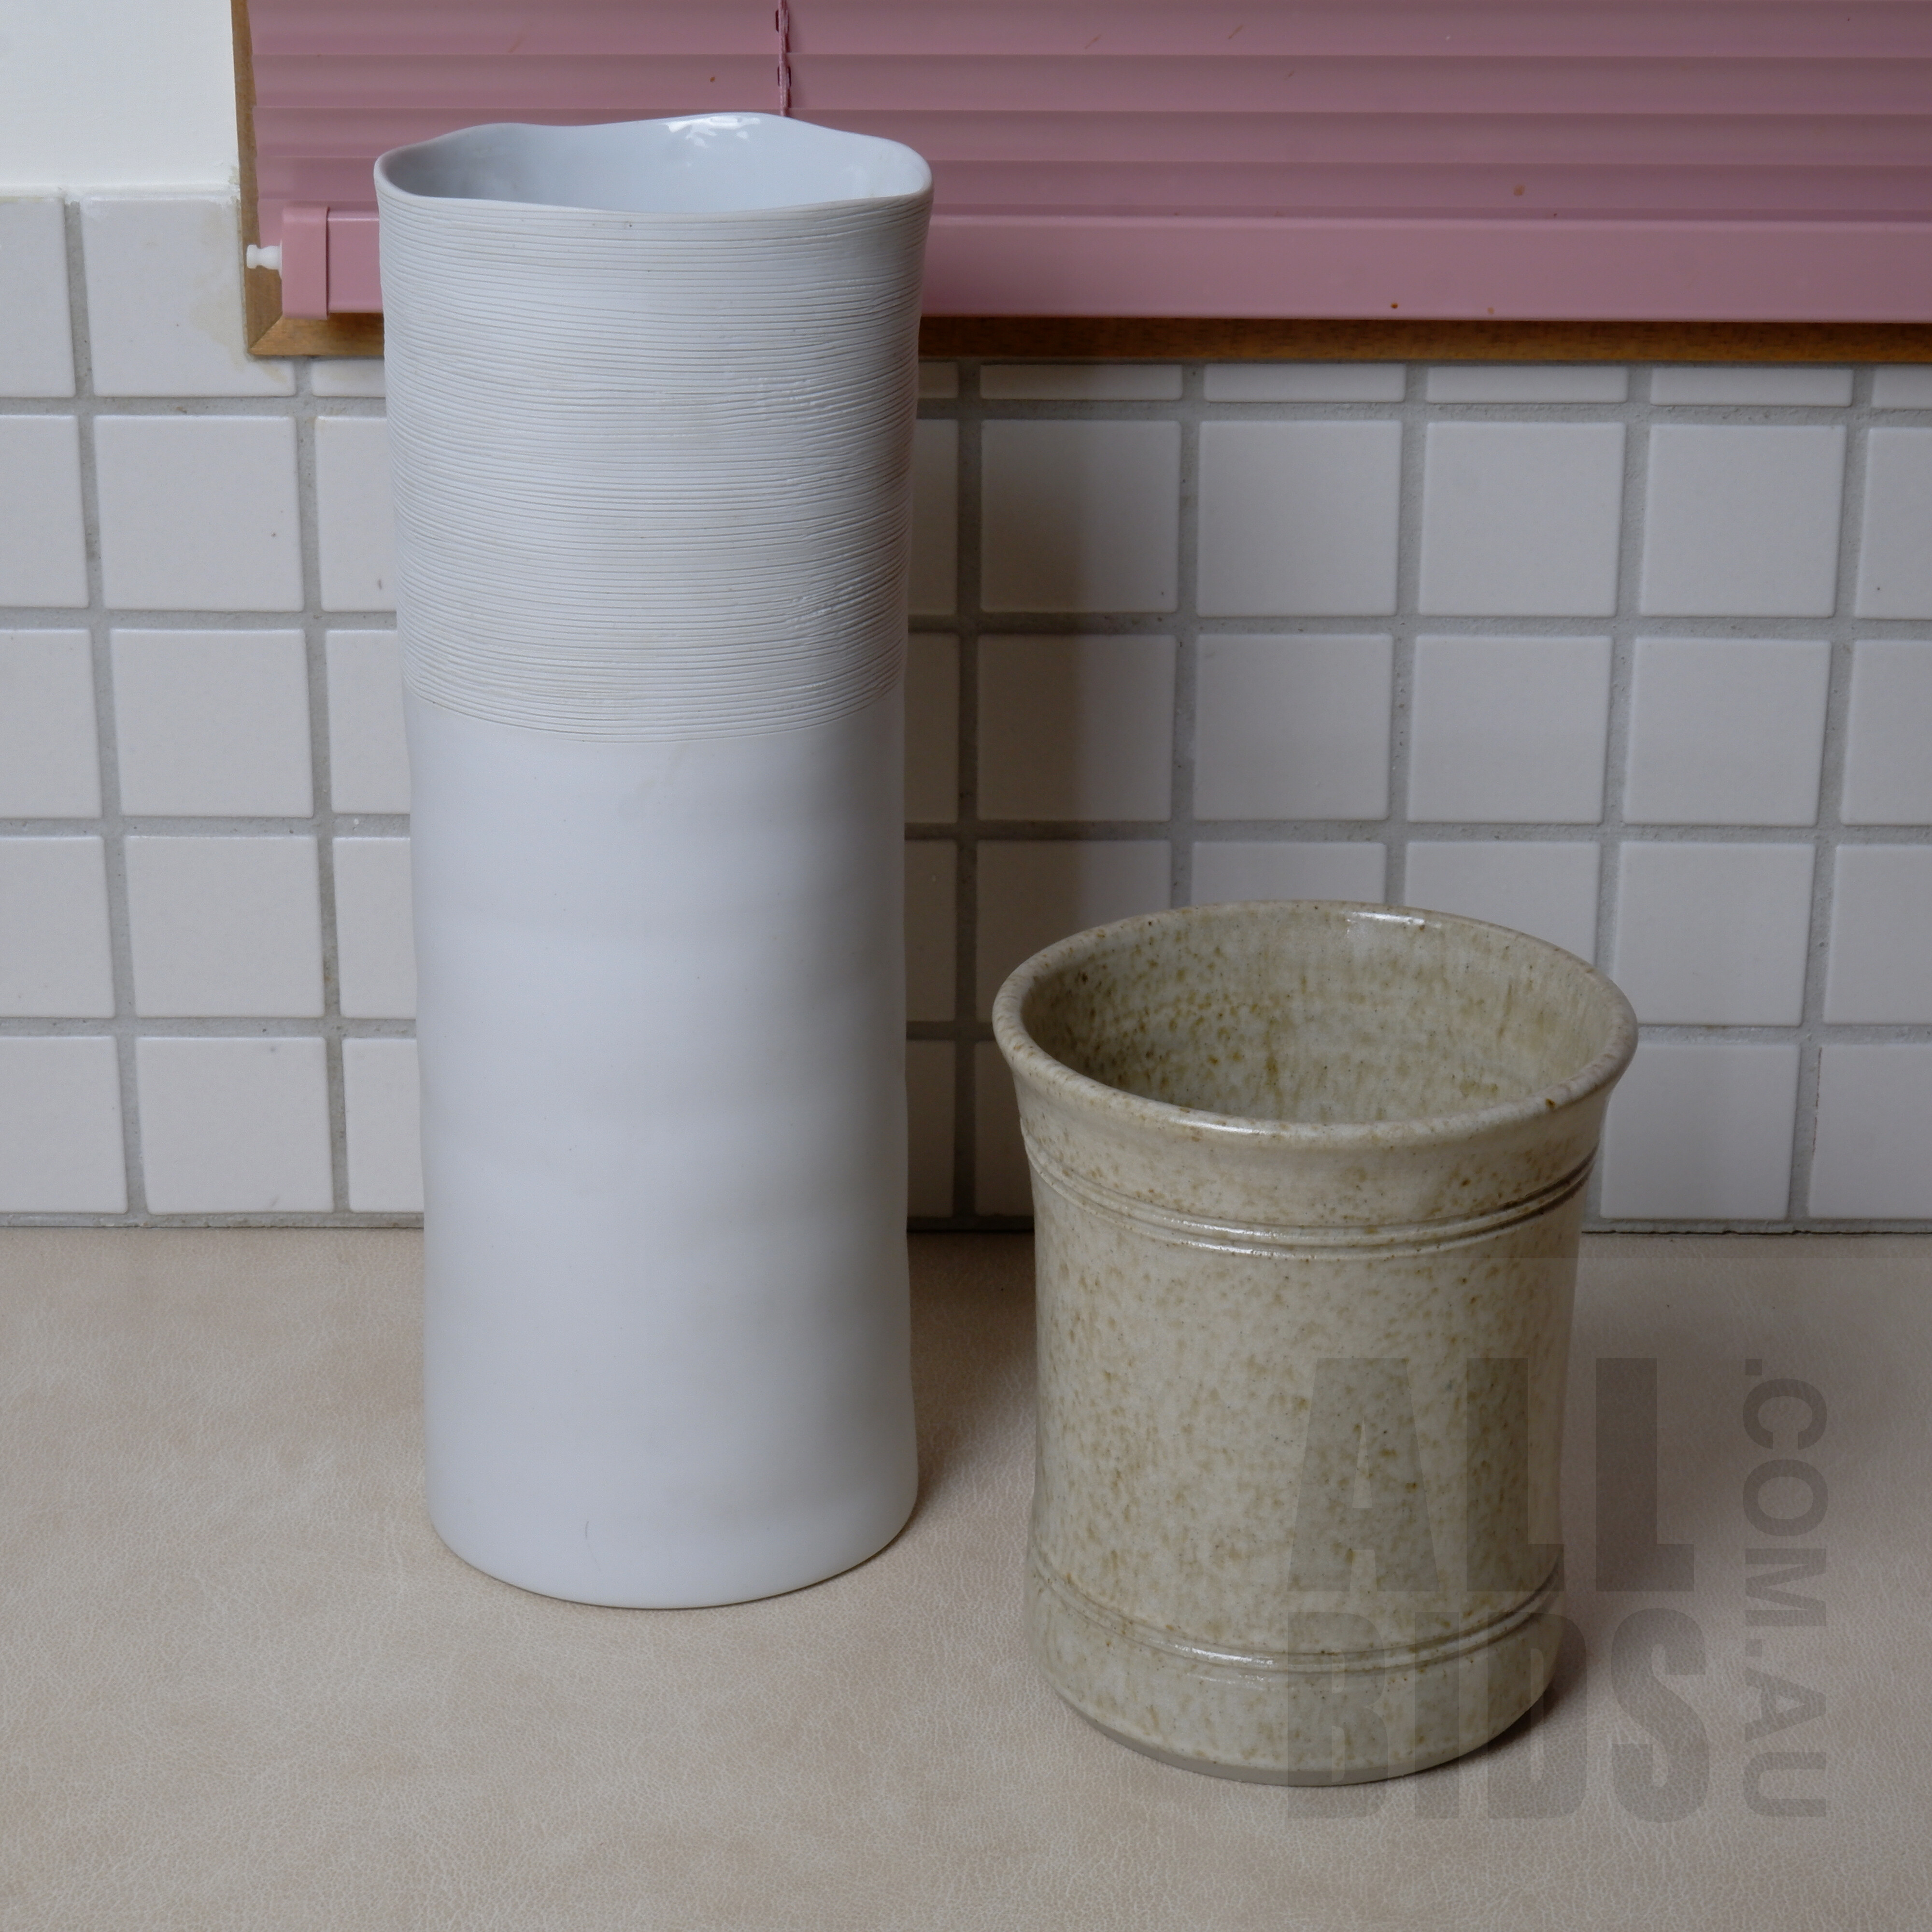 'Two Australian Studio Ceramic Vases'